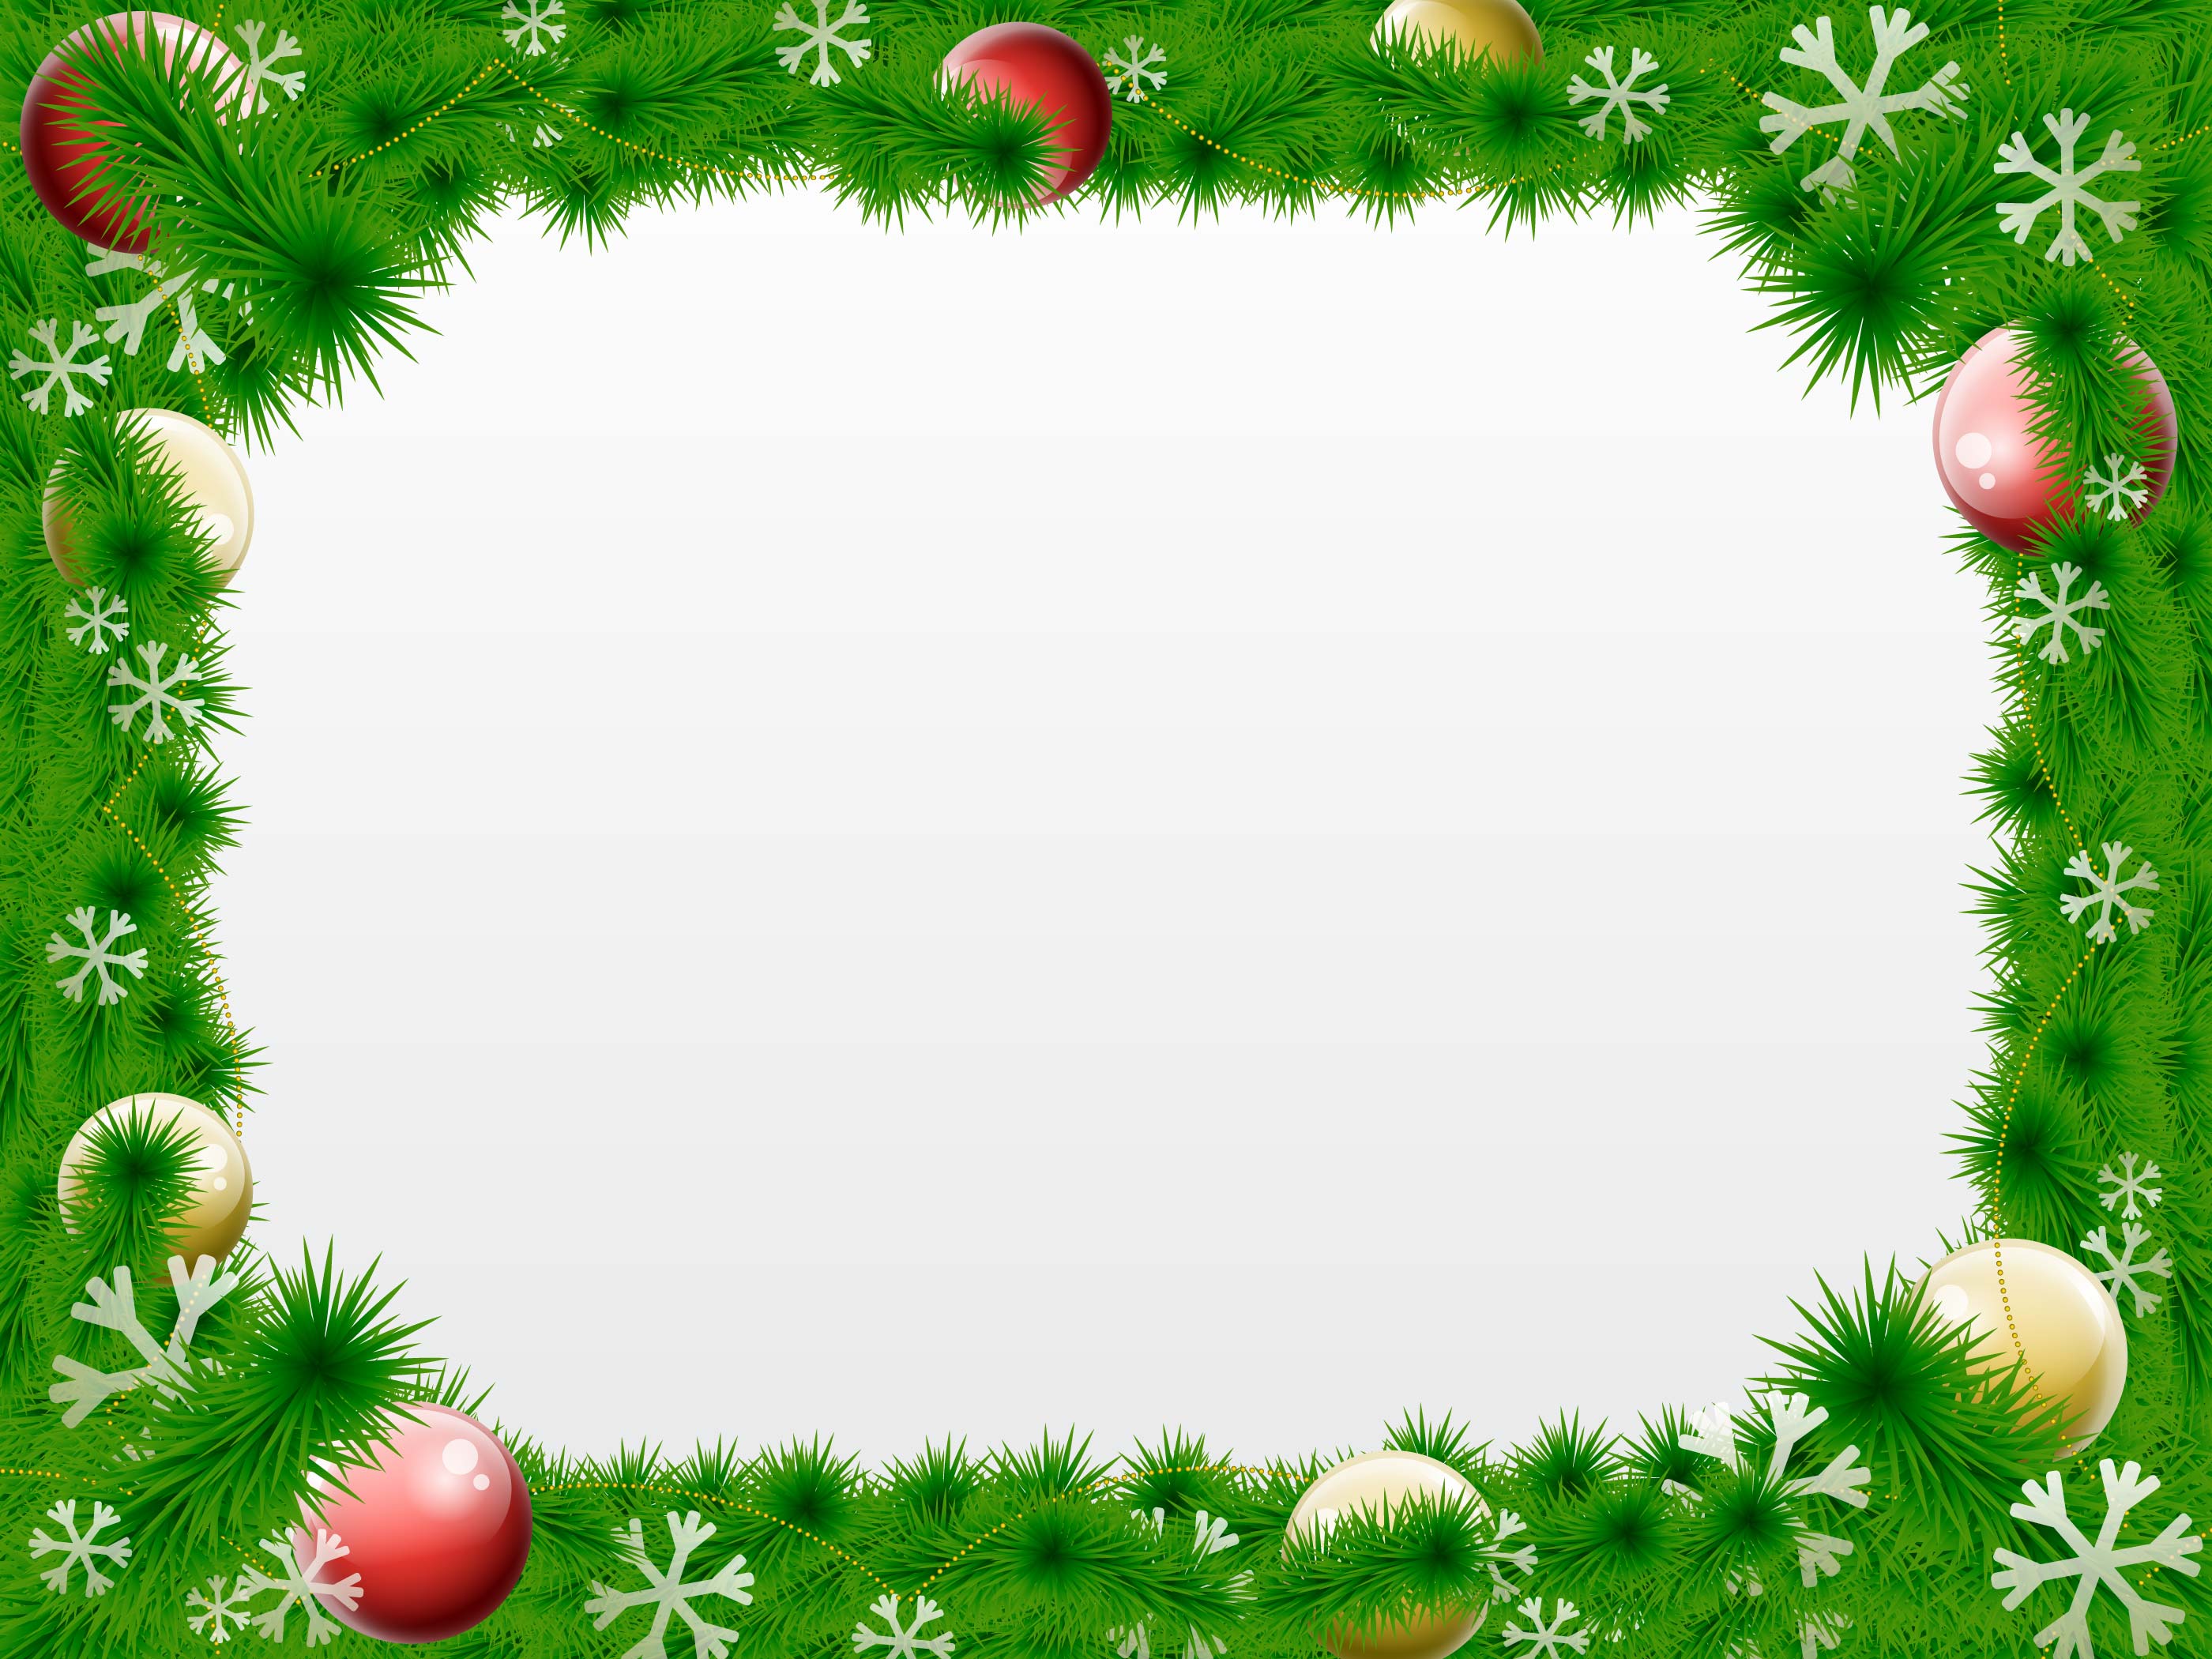 Download Christmas Wreath Vector Border - Download Free Vectors ...